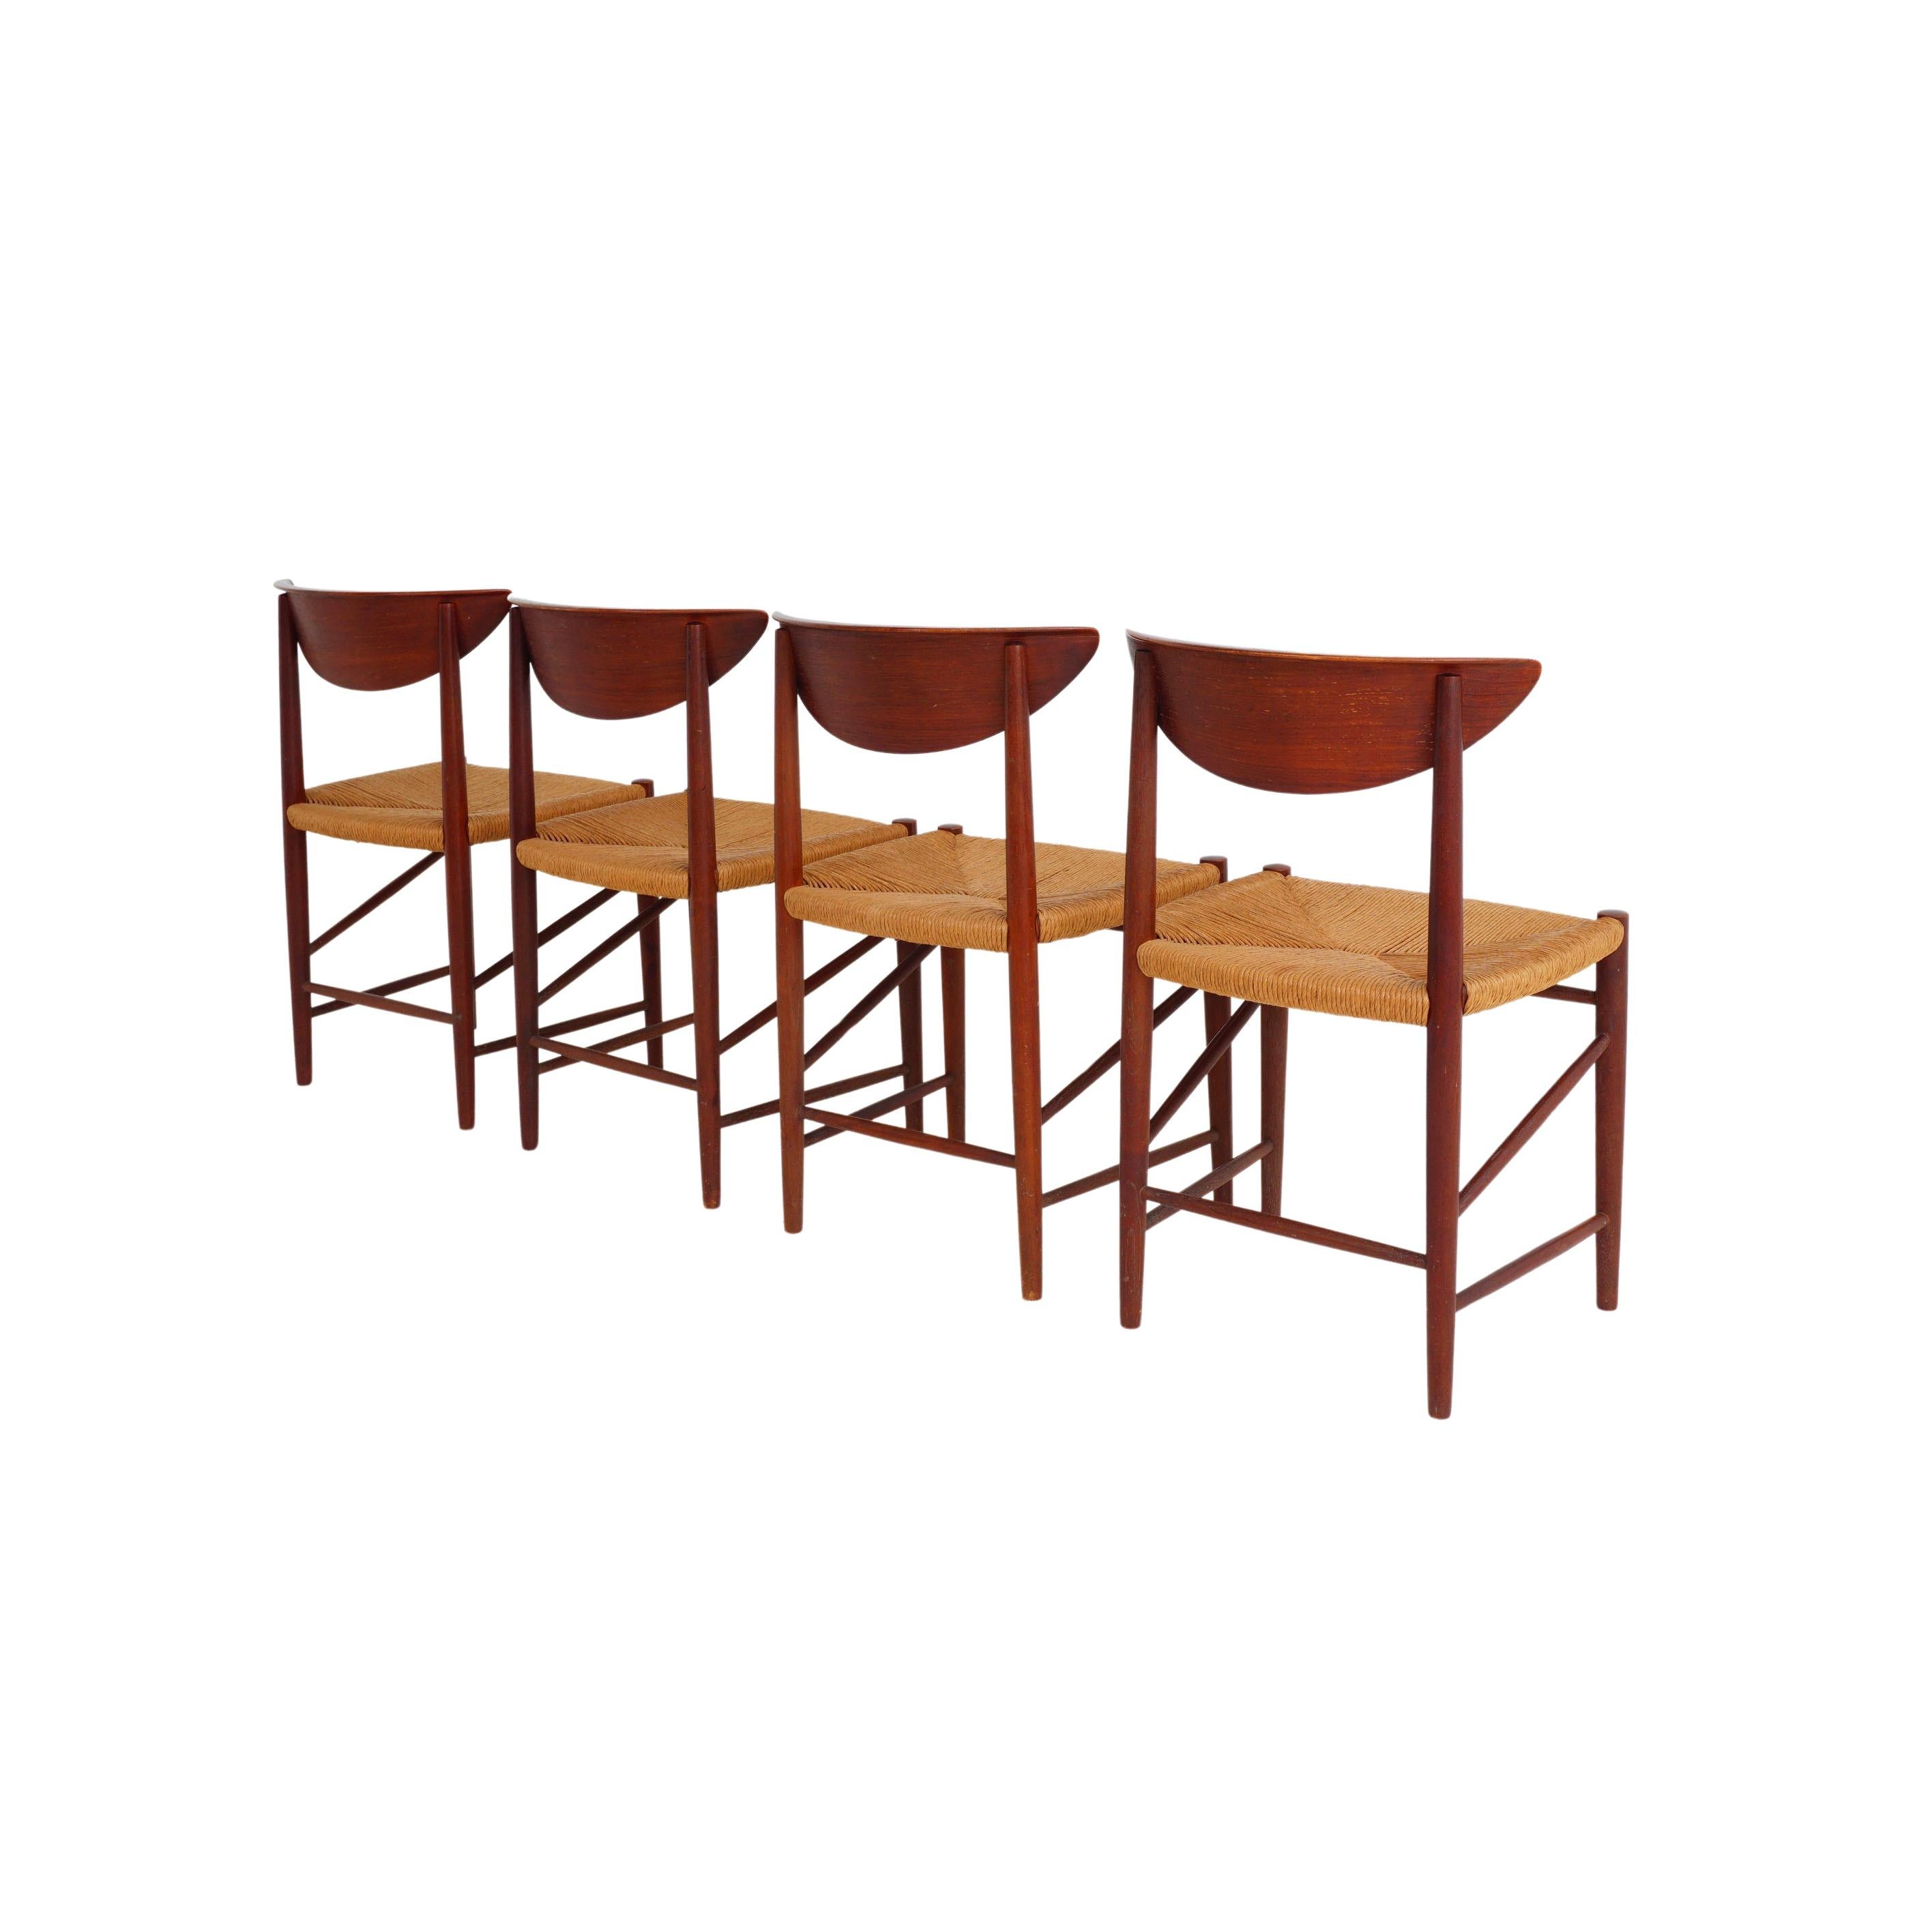 Scandinavian Modern Midcentury Dining Chairs by Peter Hvidt & Orla Mølgaard-Nielsen, 1950s For Sale